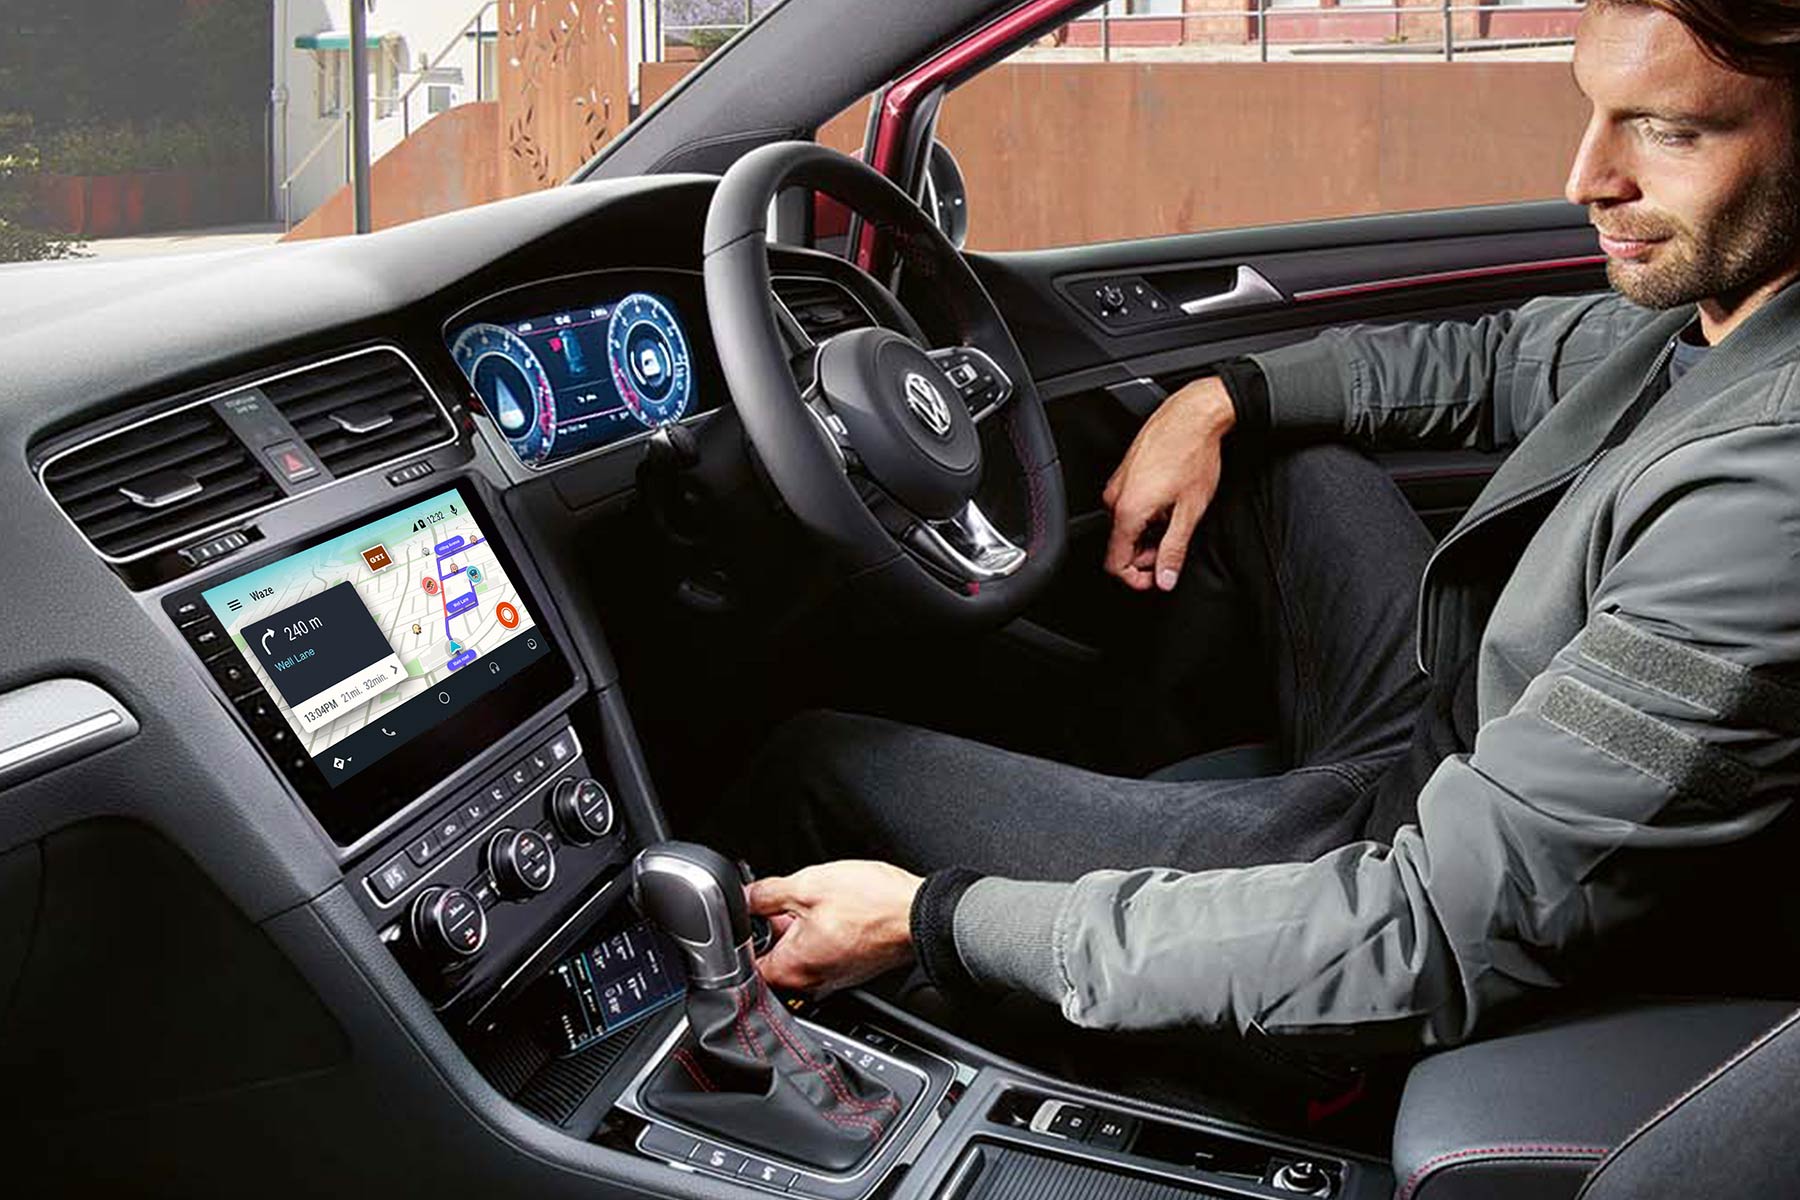 Volkswagen partners with Waze app for GTI Superdrives